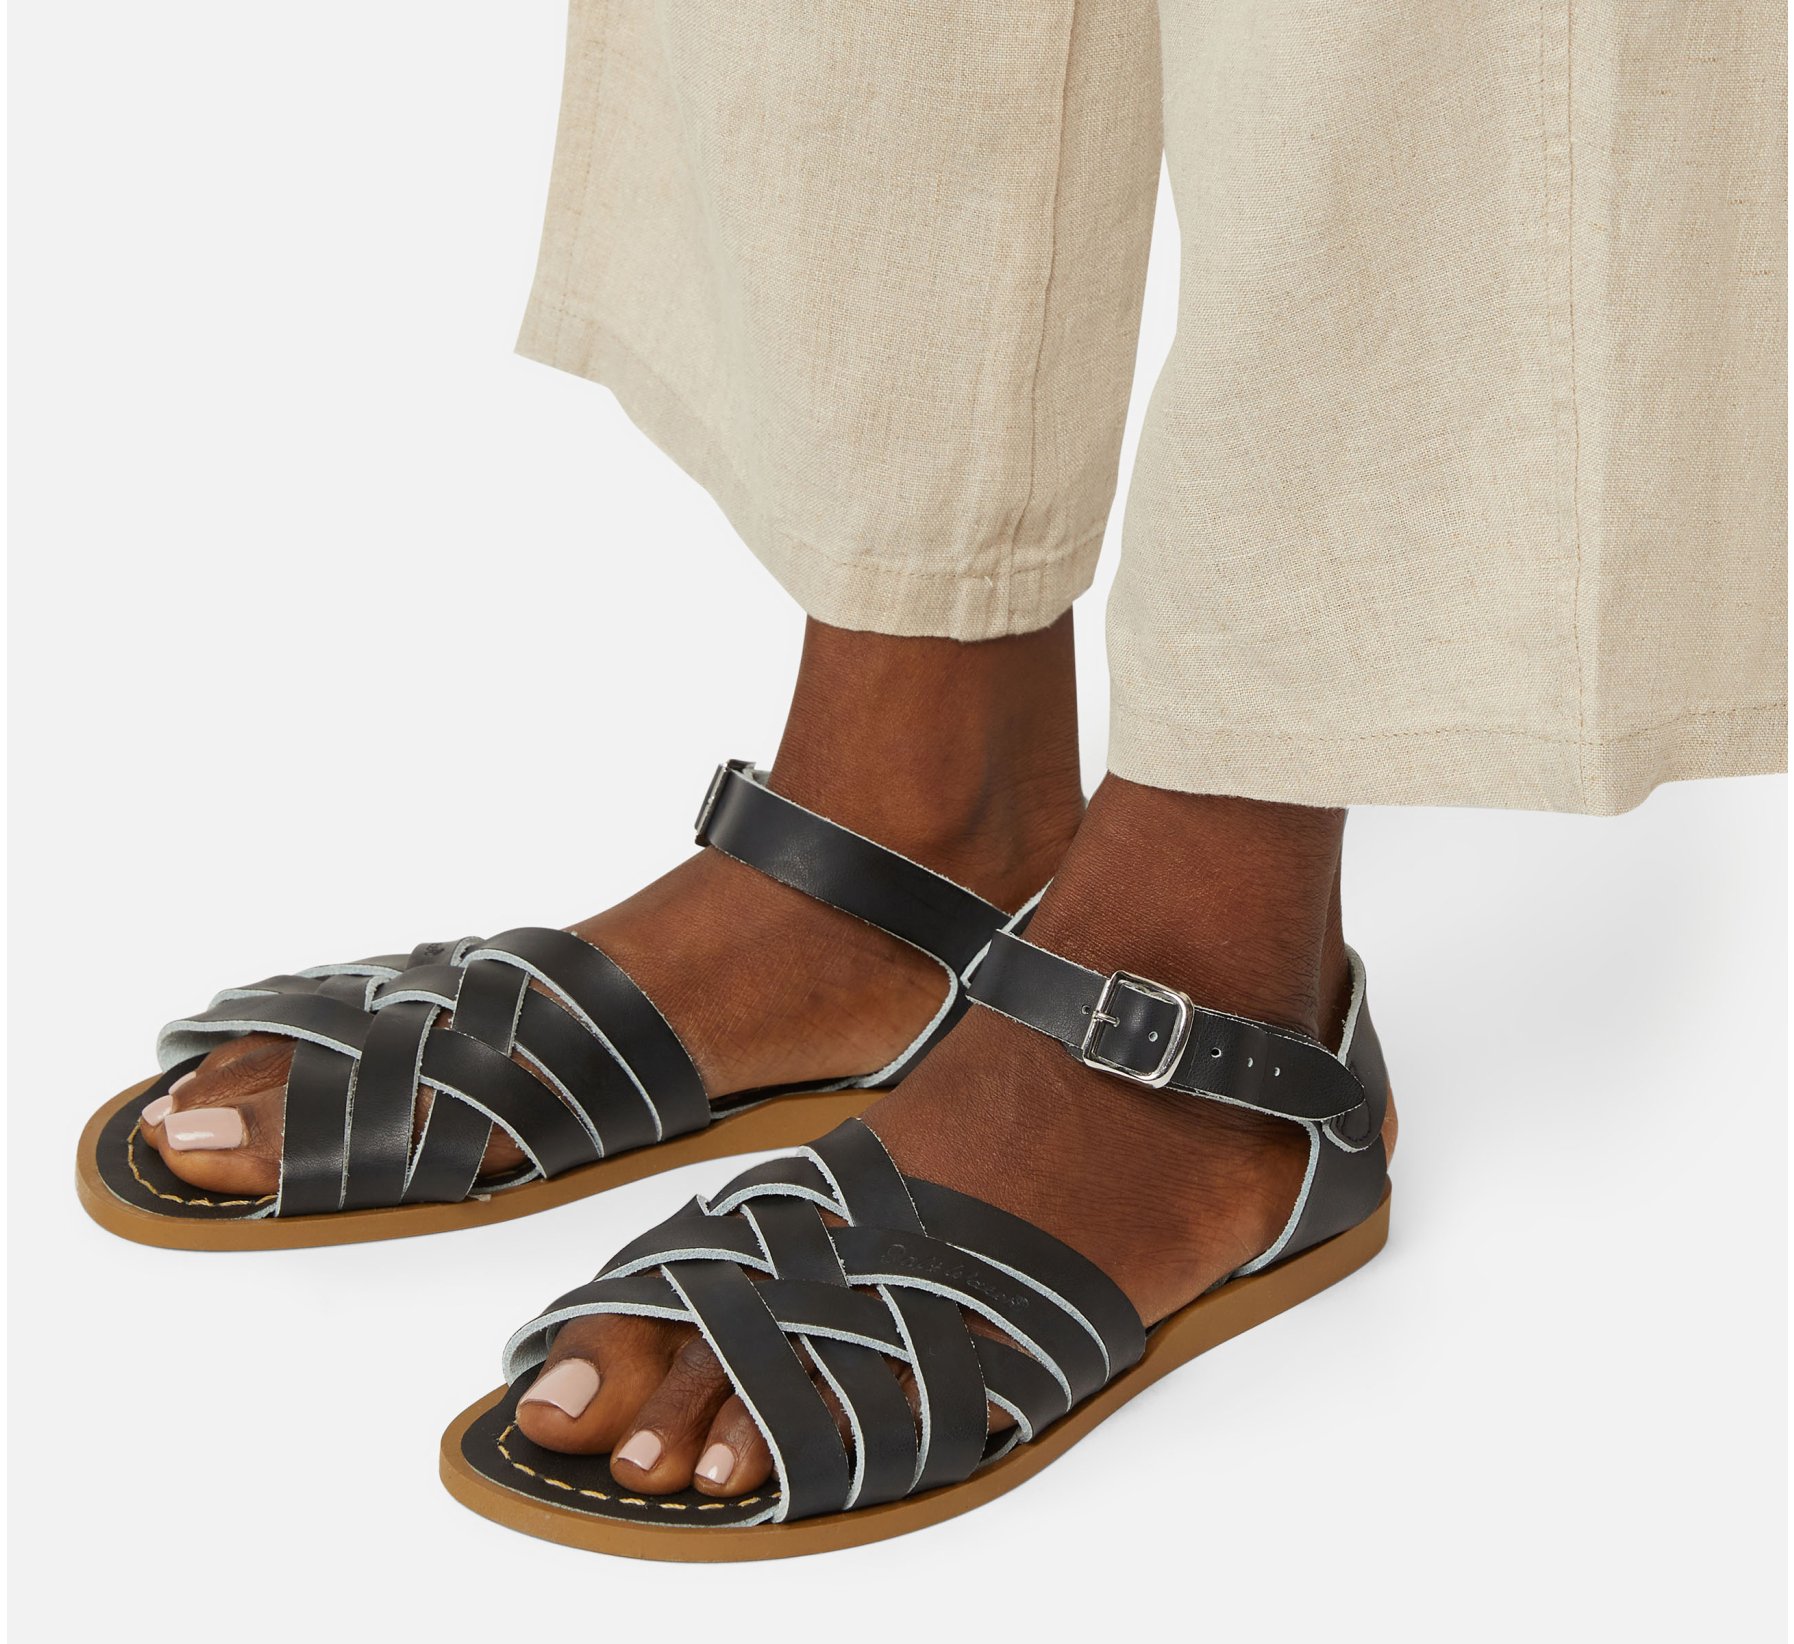 Retro Black Sandal - Salt Water Sandals